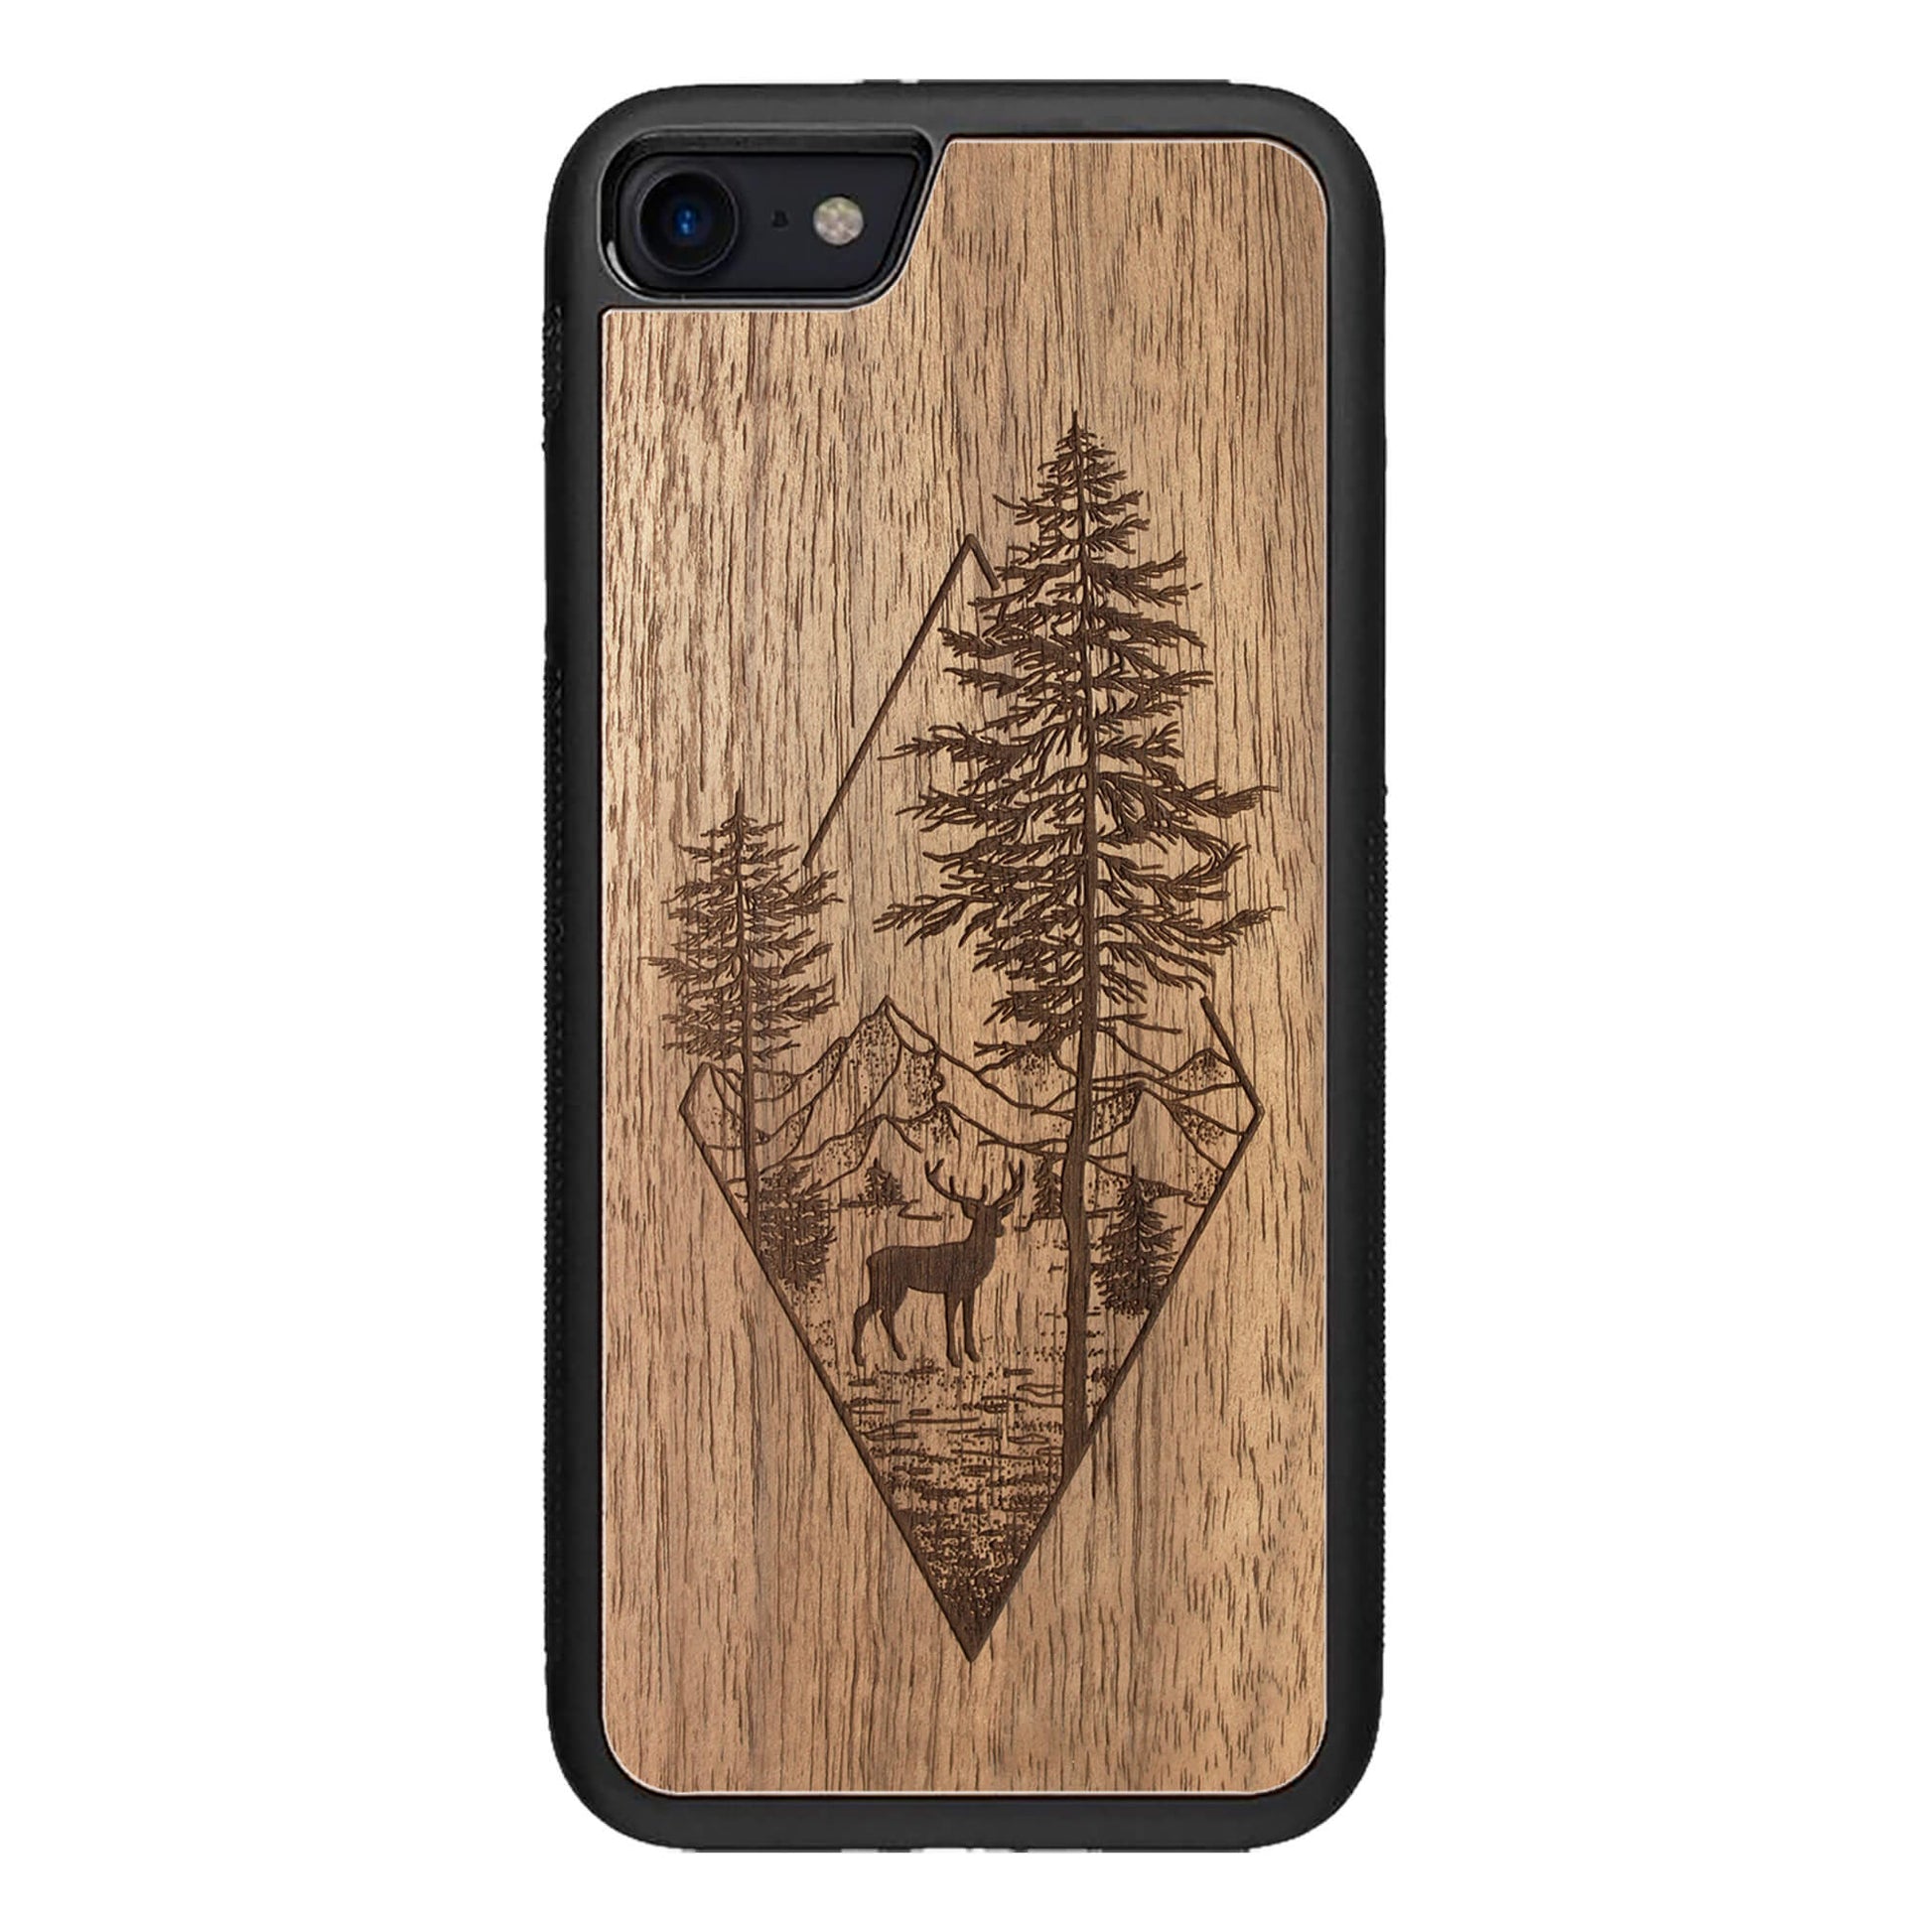 Wooden Case for iPhone 8 Deer Woodland